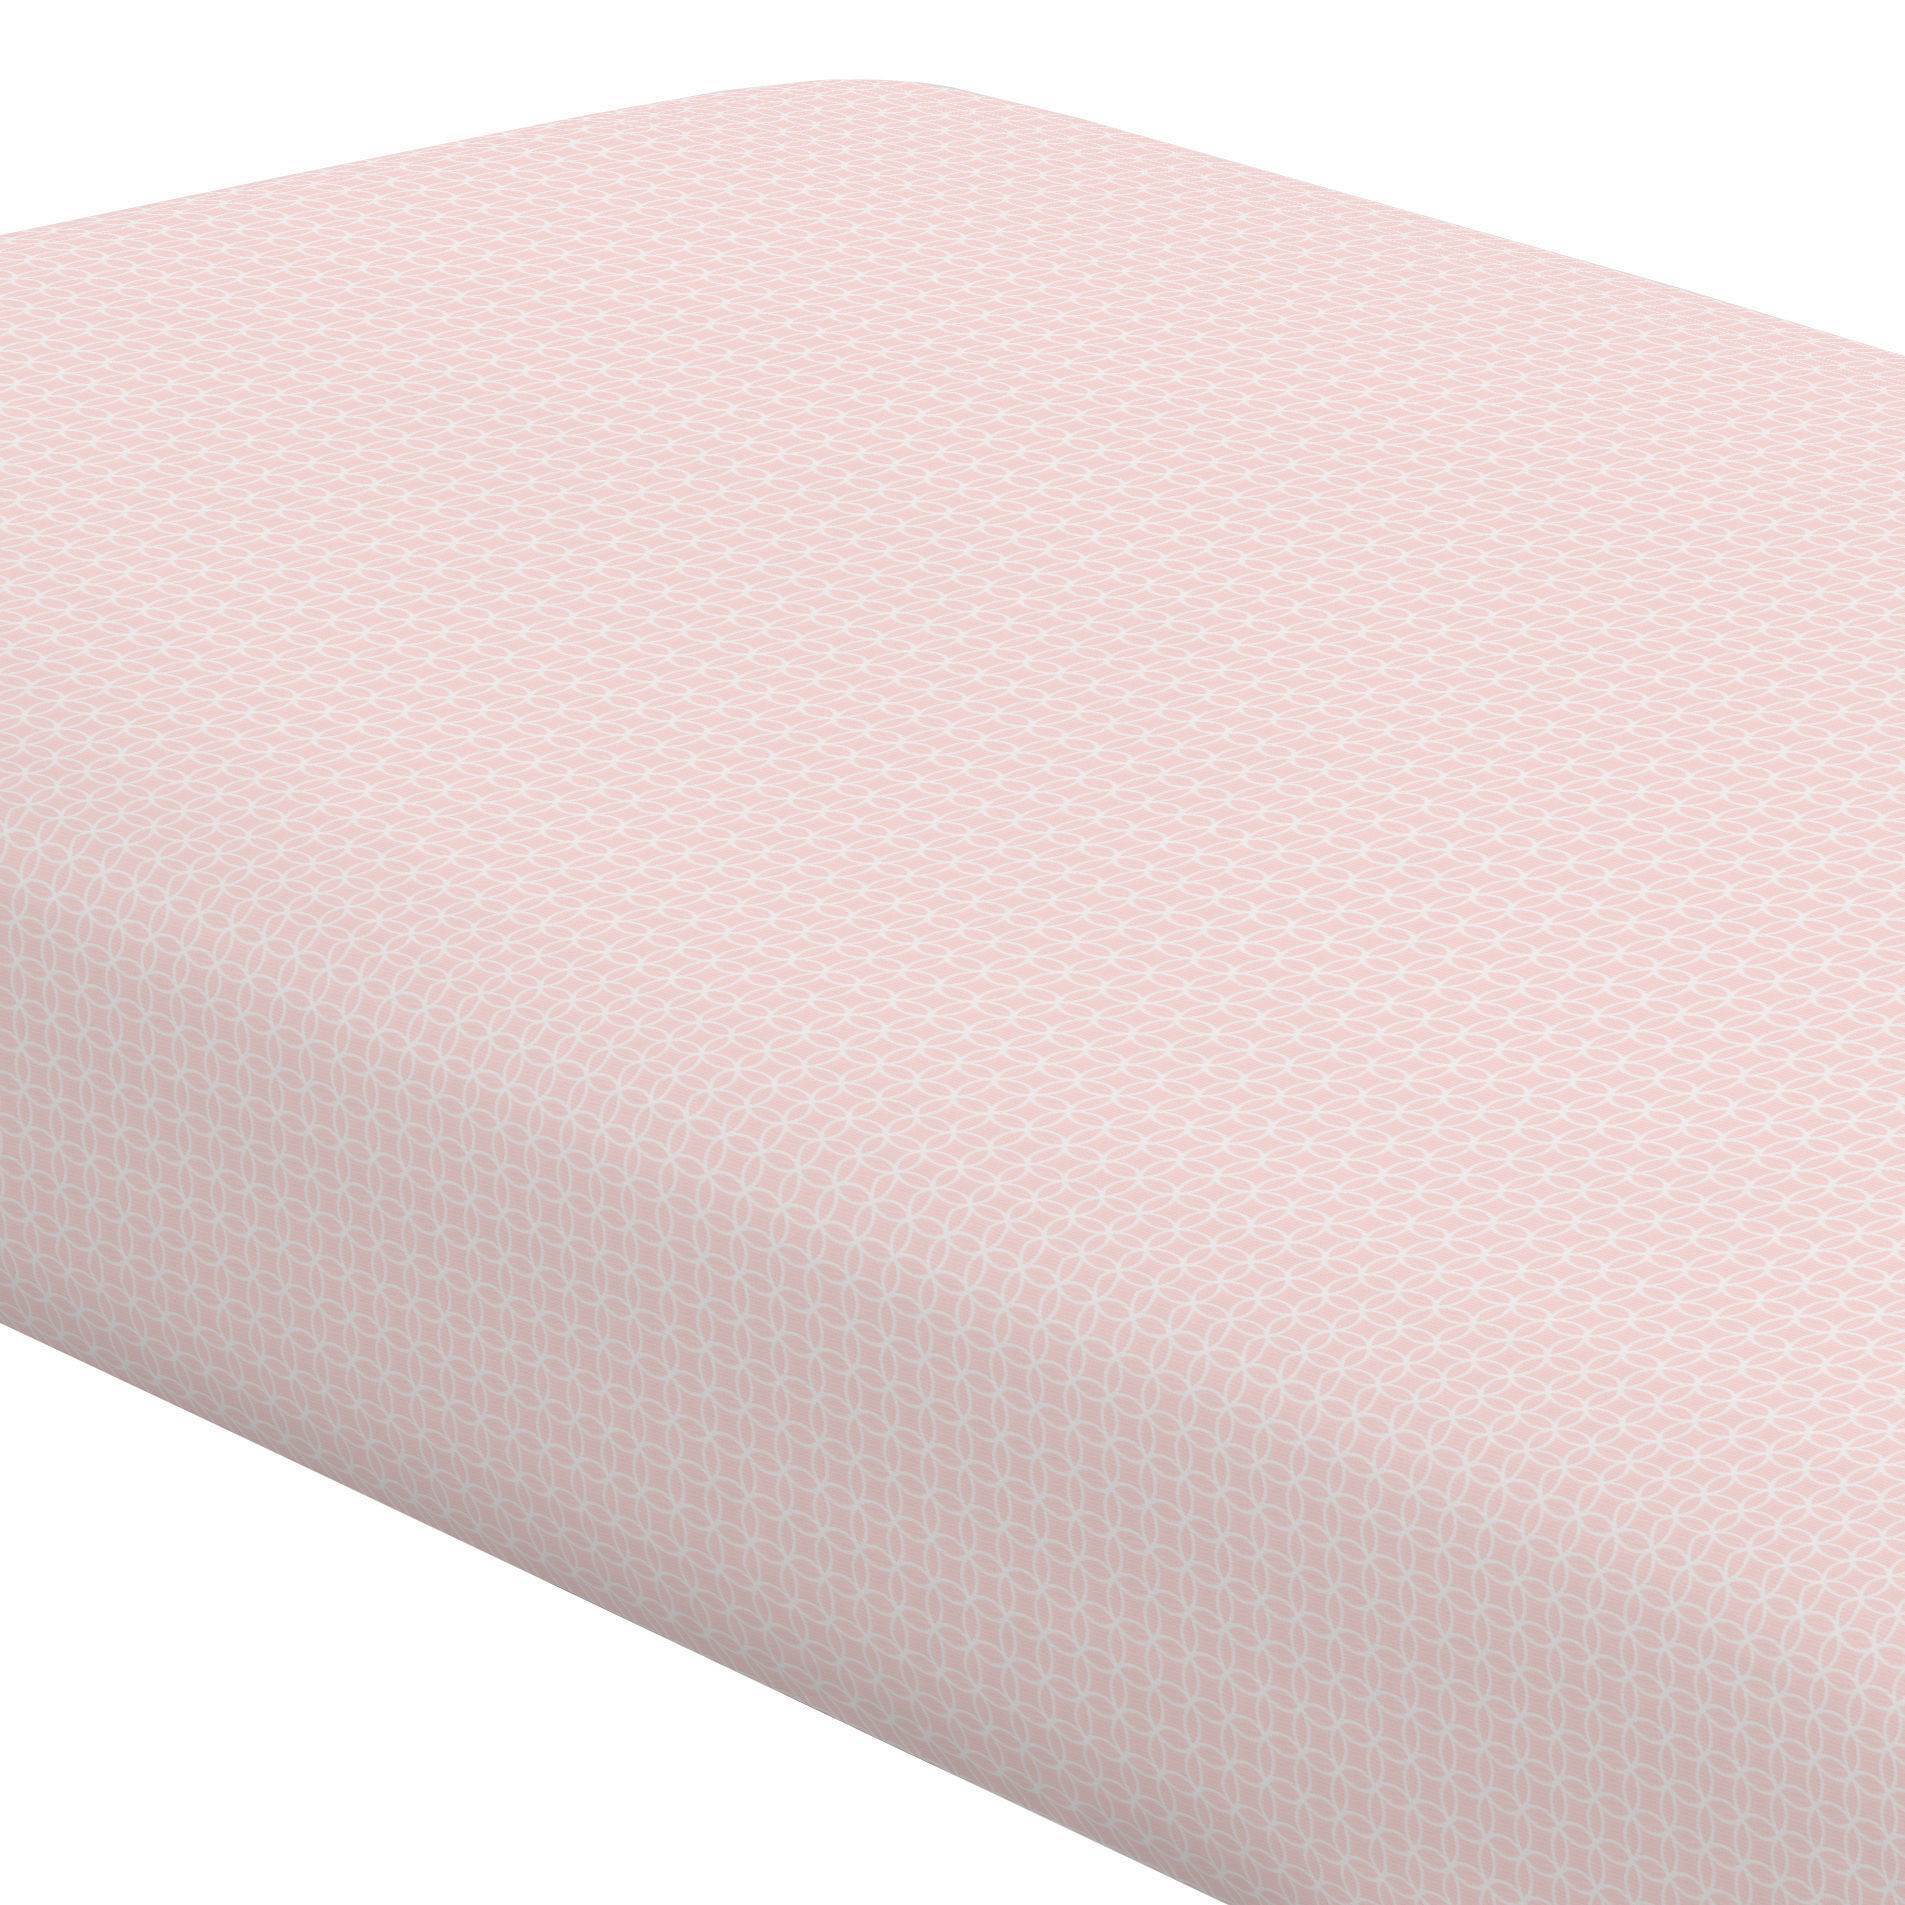 Pink Circles Crib Sheet, Quality Crib Sheets